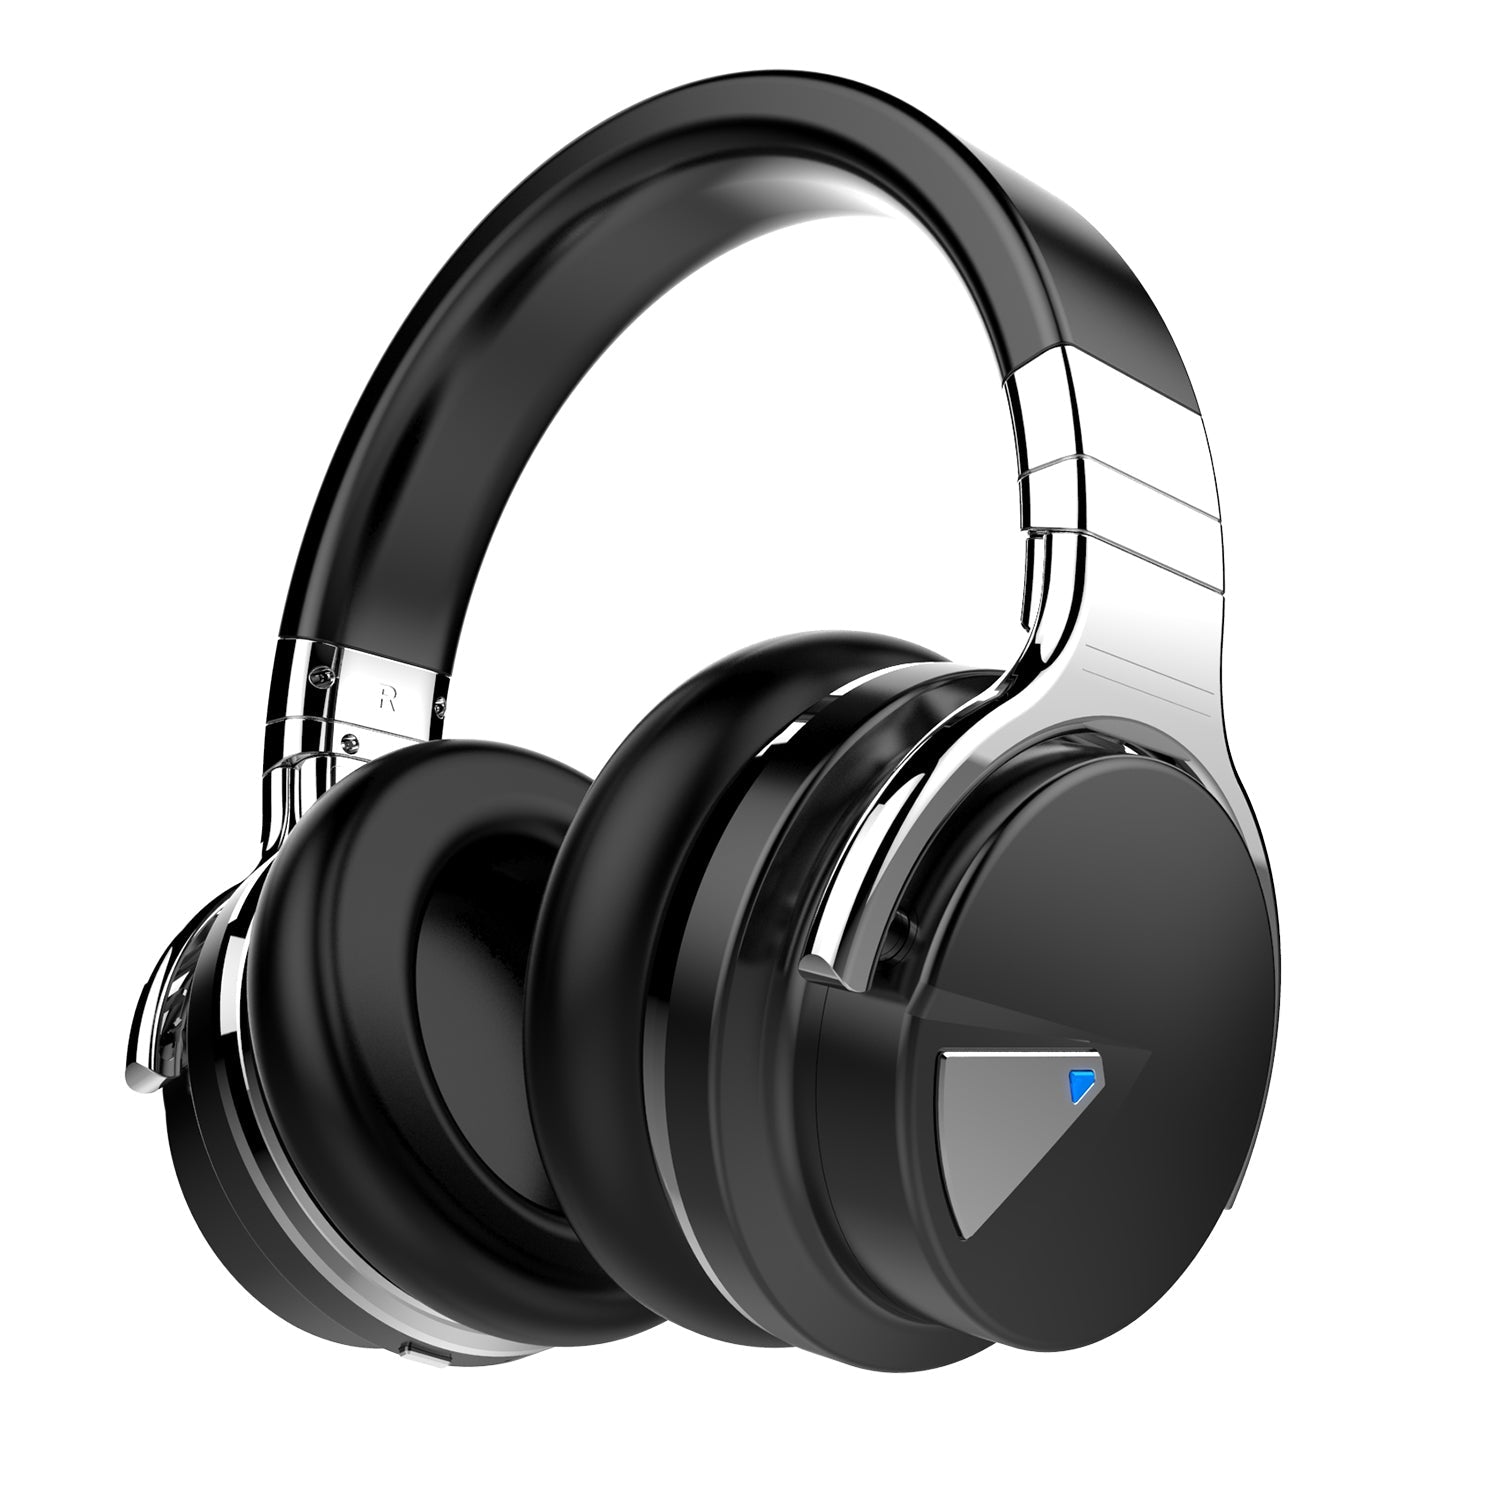 COWIN E7KY ANC Headphone US EU Warehouse Noise Canceling Casque Gamer Blutooth Headset Wireless Bluetooth Earphone baby magazin 